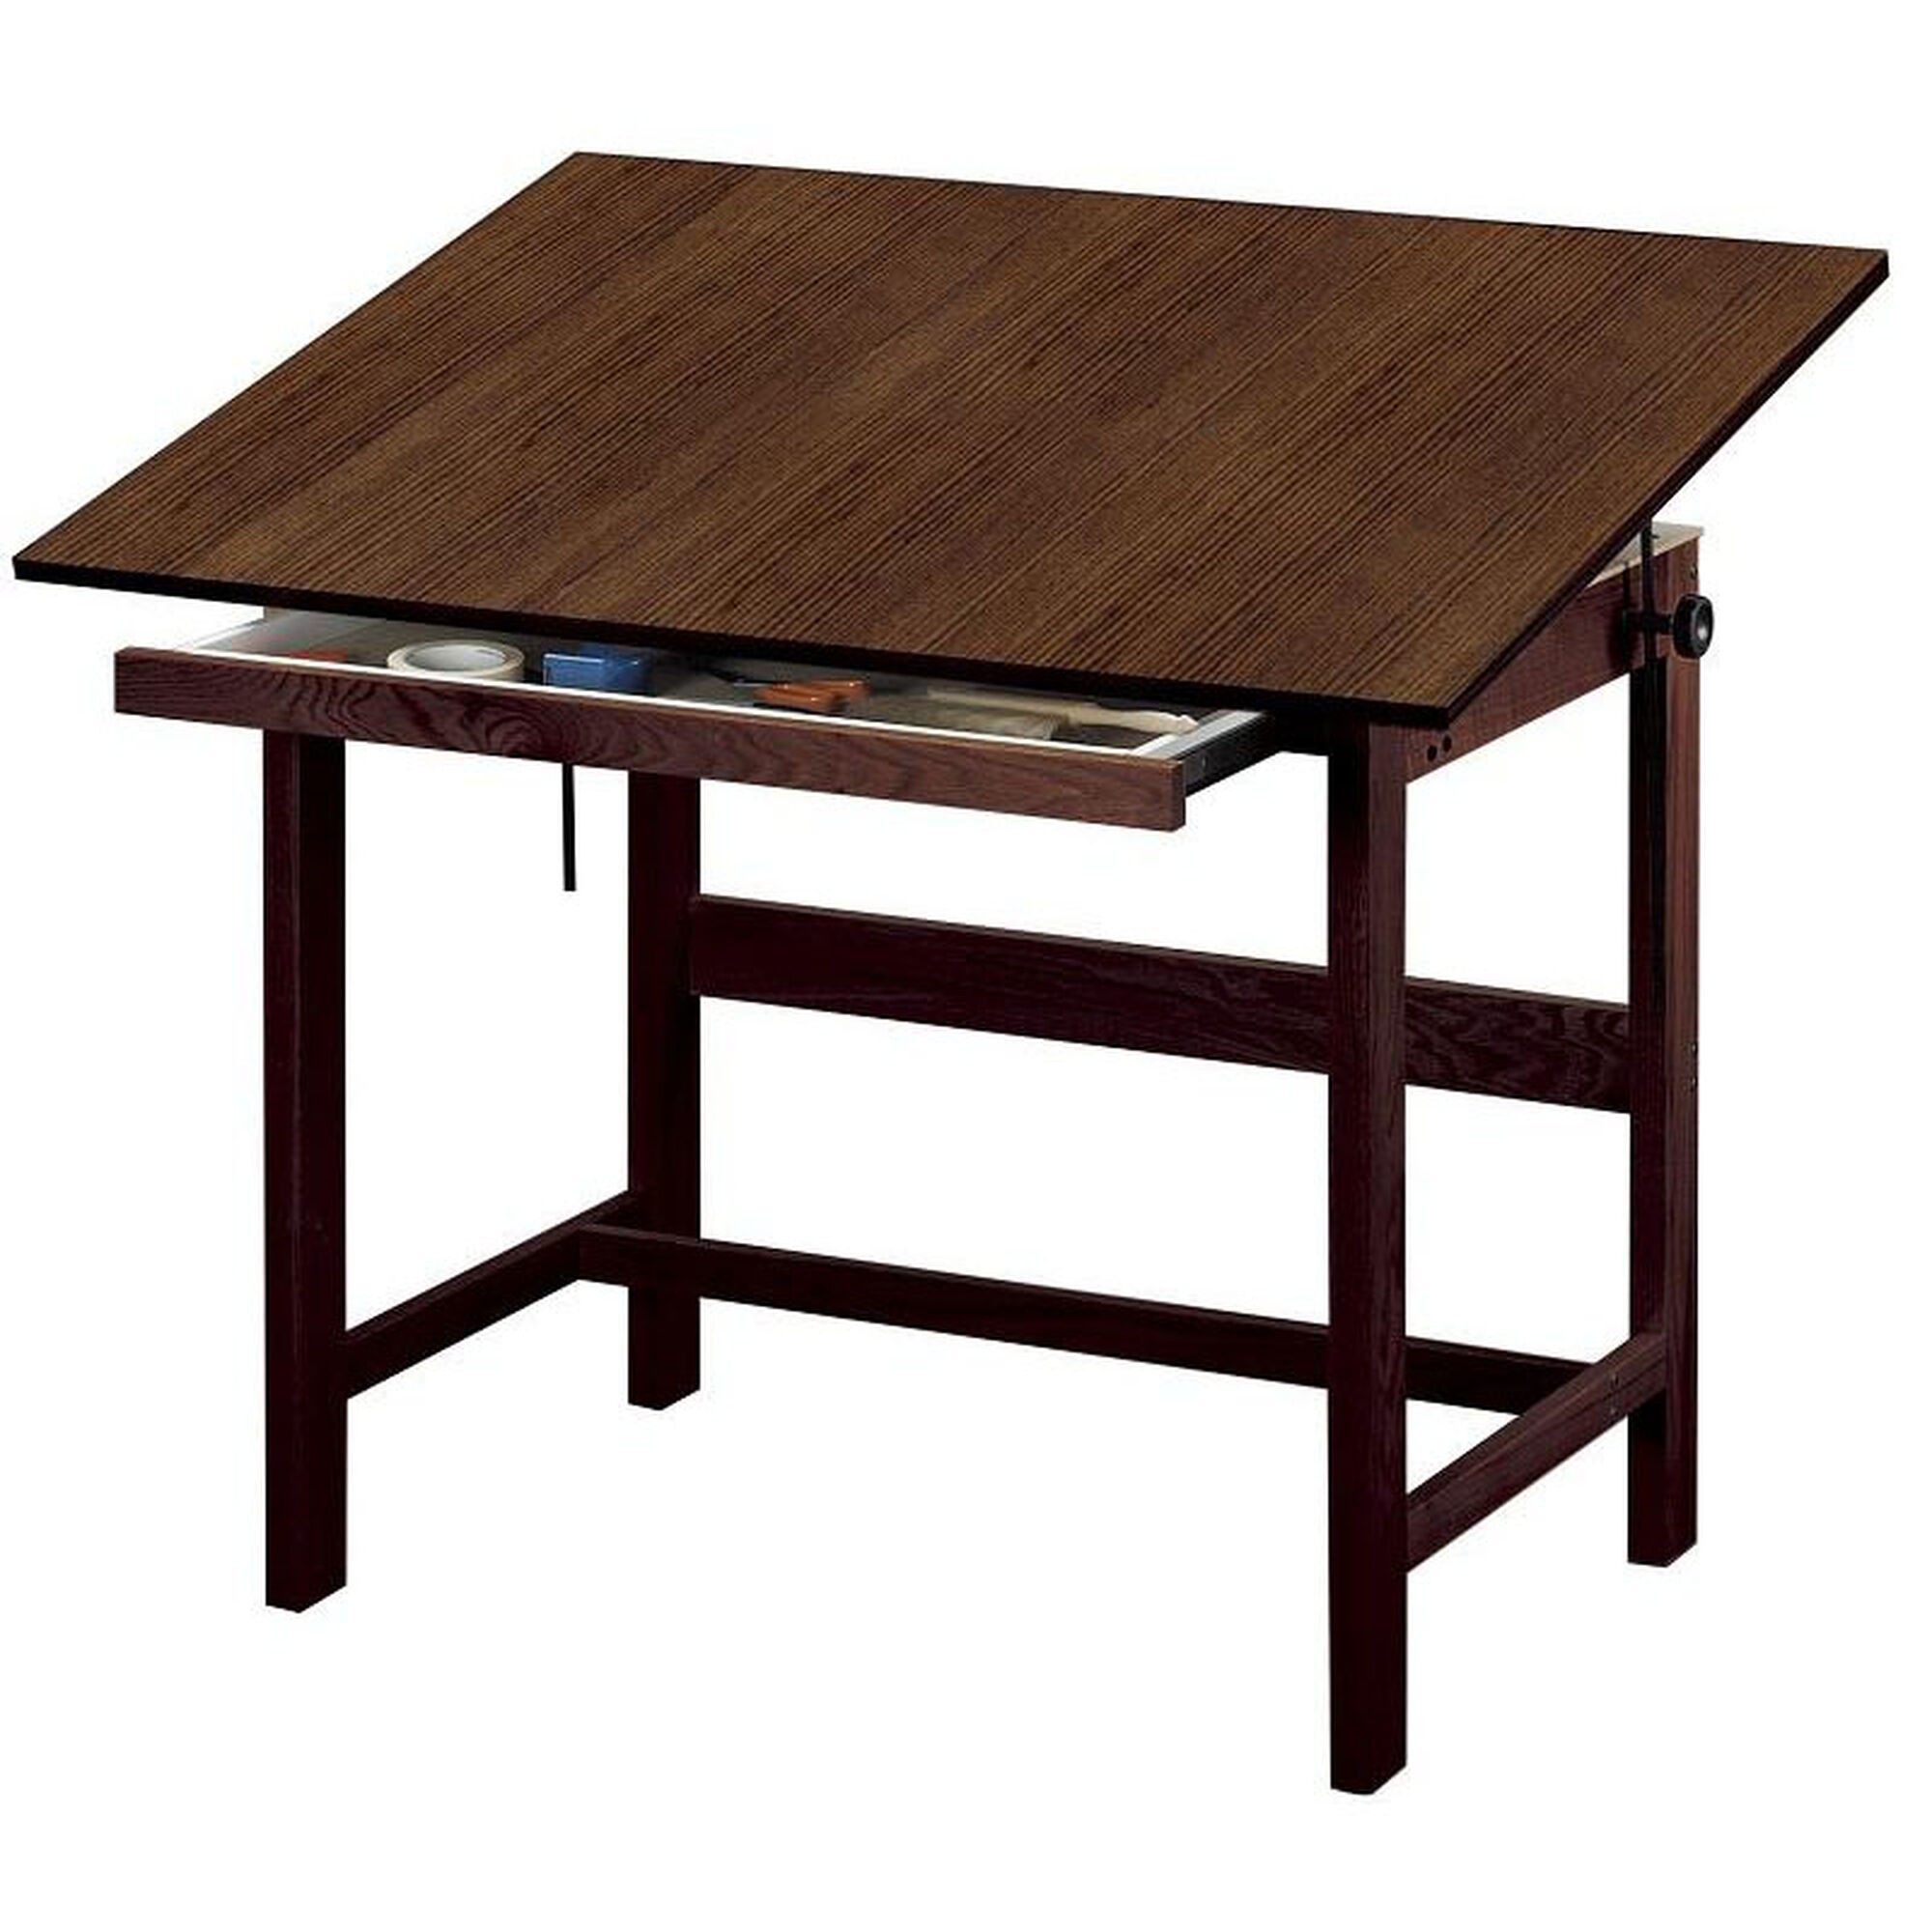 Titan Solid Oak Drafting Table w Drawer in Walnut Finish (42 in. L x 31 in. W x 37 in. H)